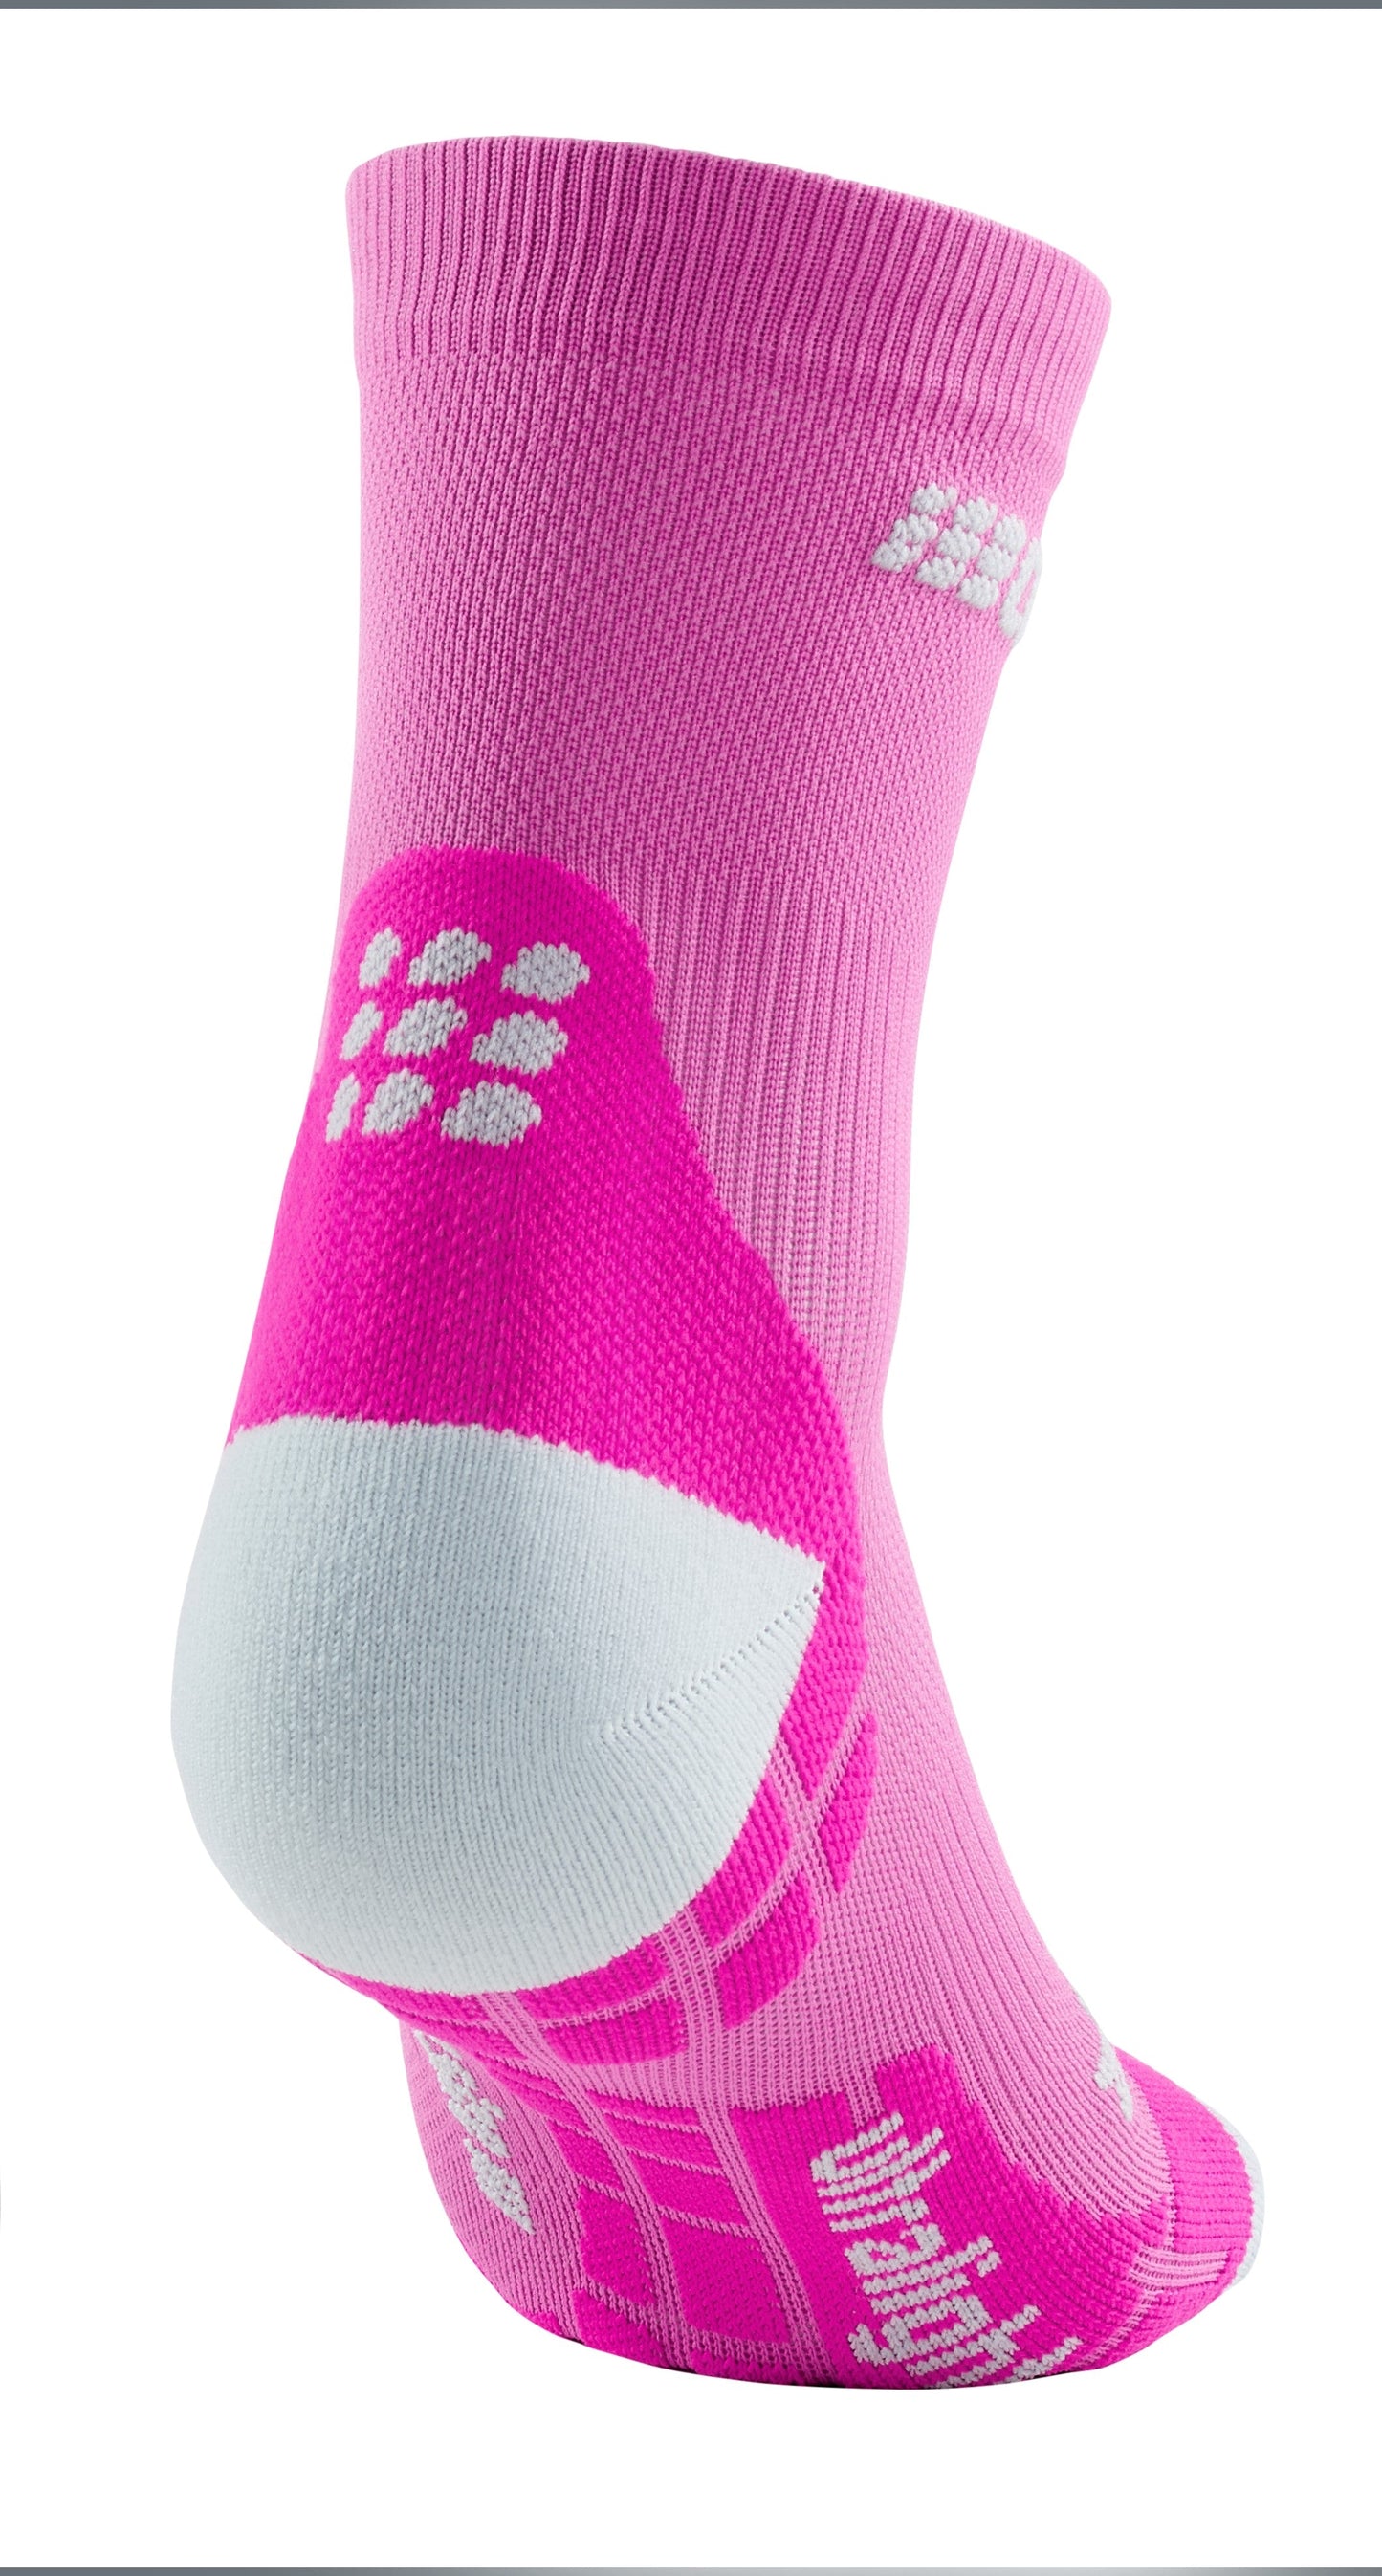 CEP Ultralight  Short Compression Sock Women's - Pink / Light Gray